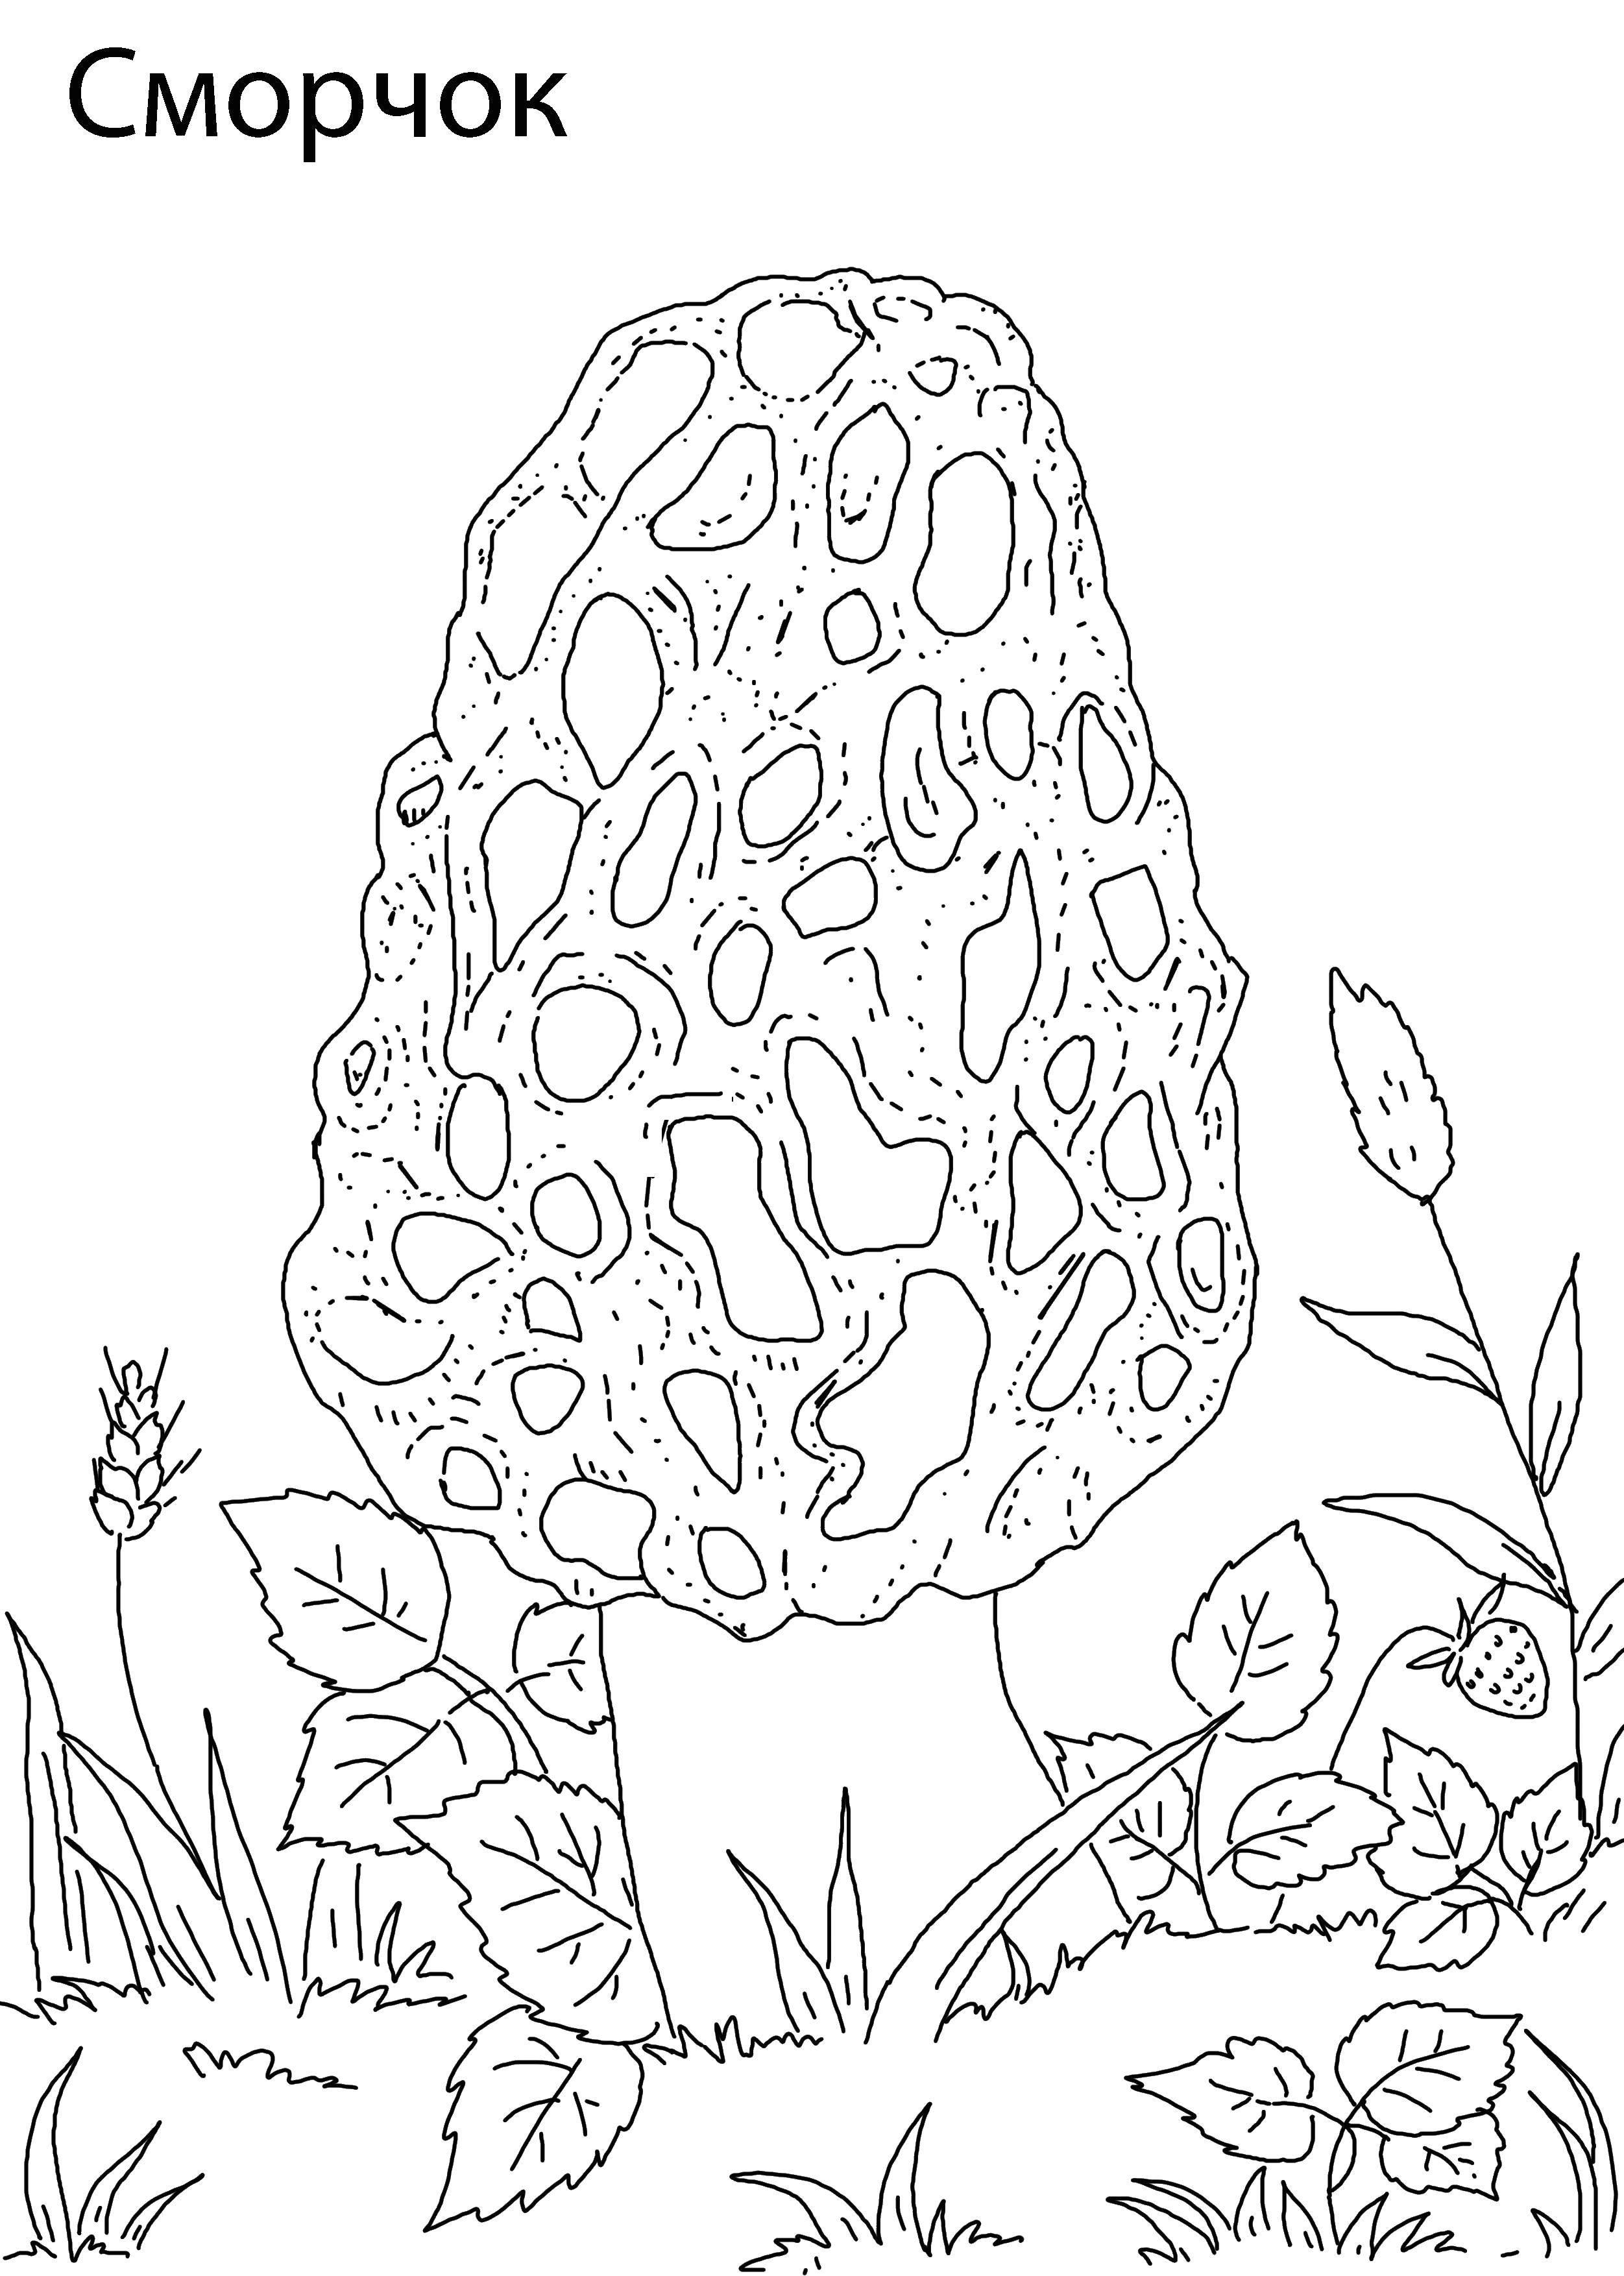 Сморчок гриб рисунок карандашом